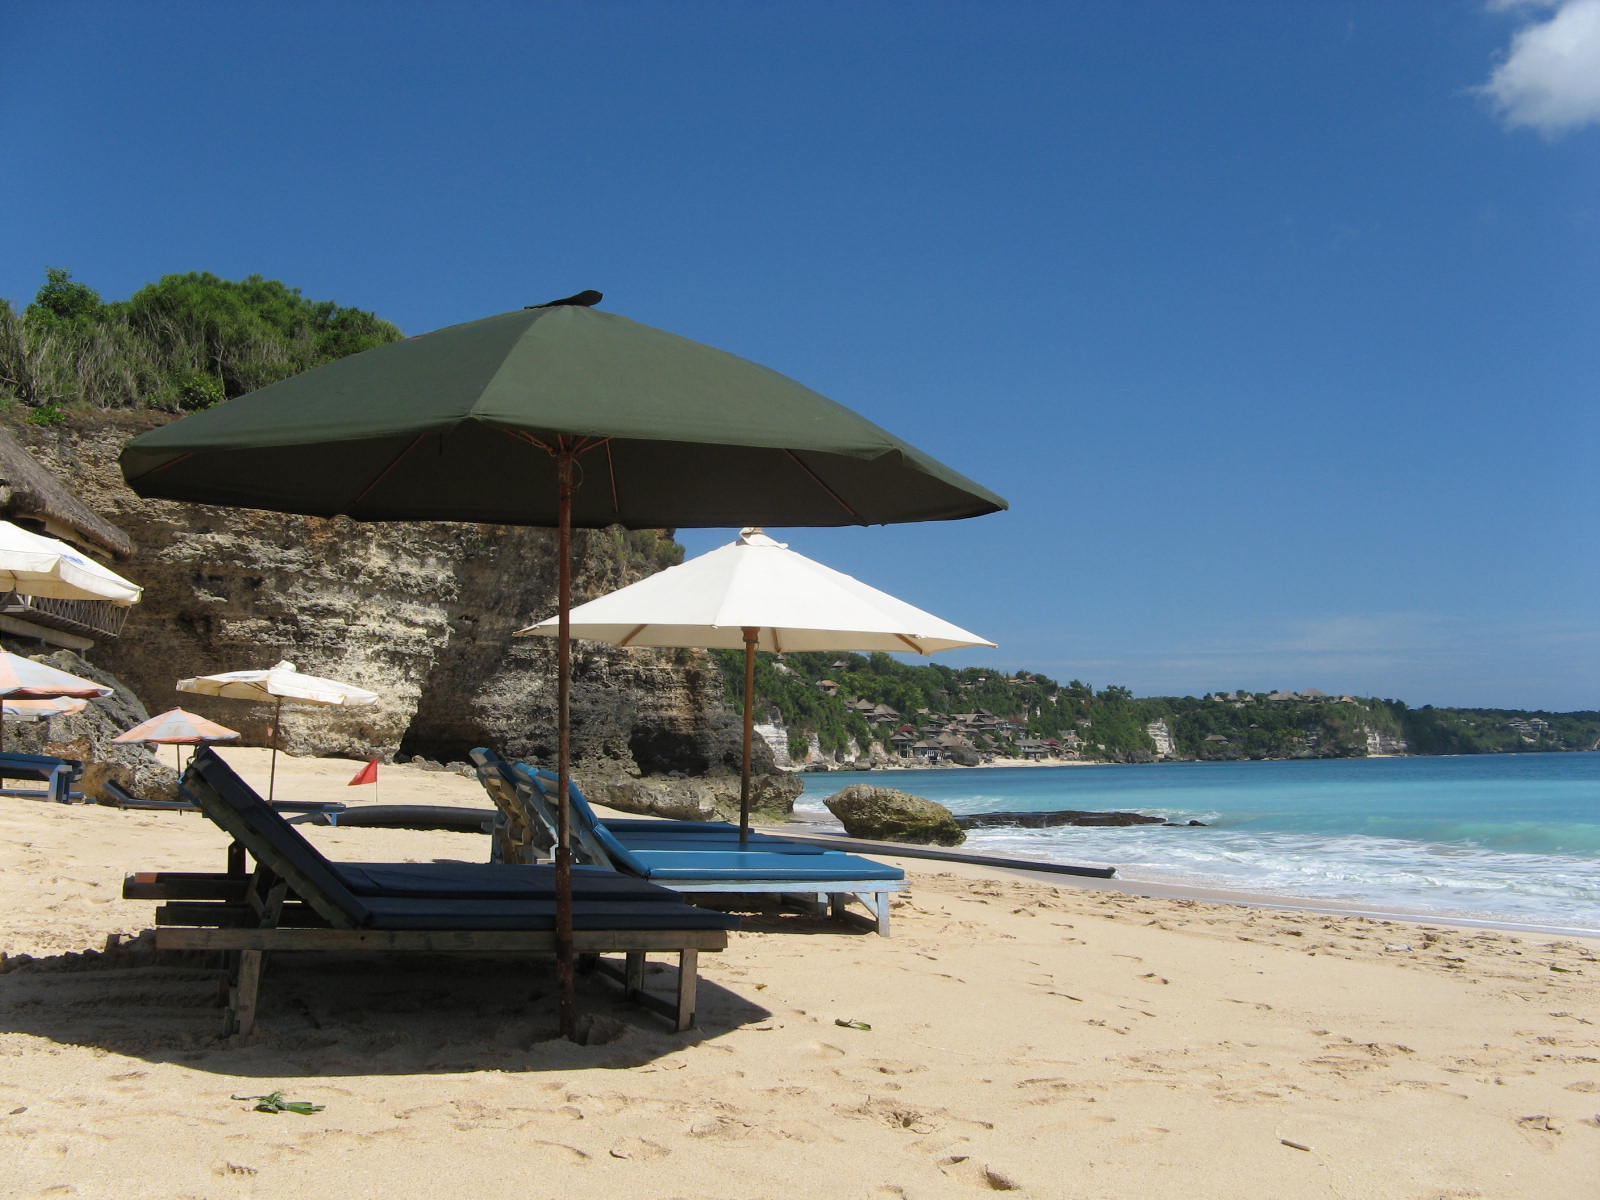 New Blogger In Google Information: Beach In Bali